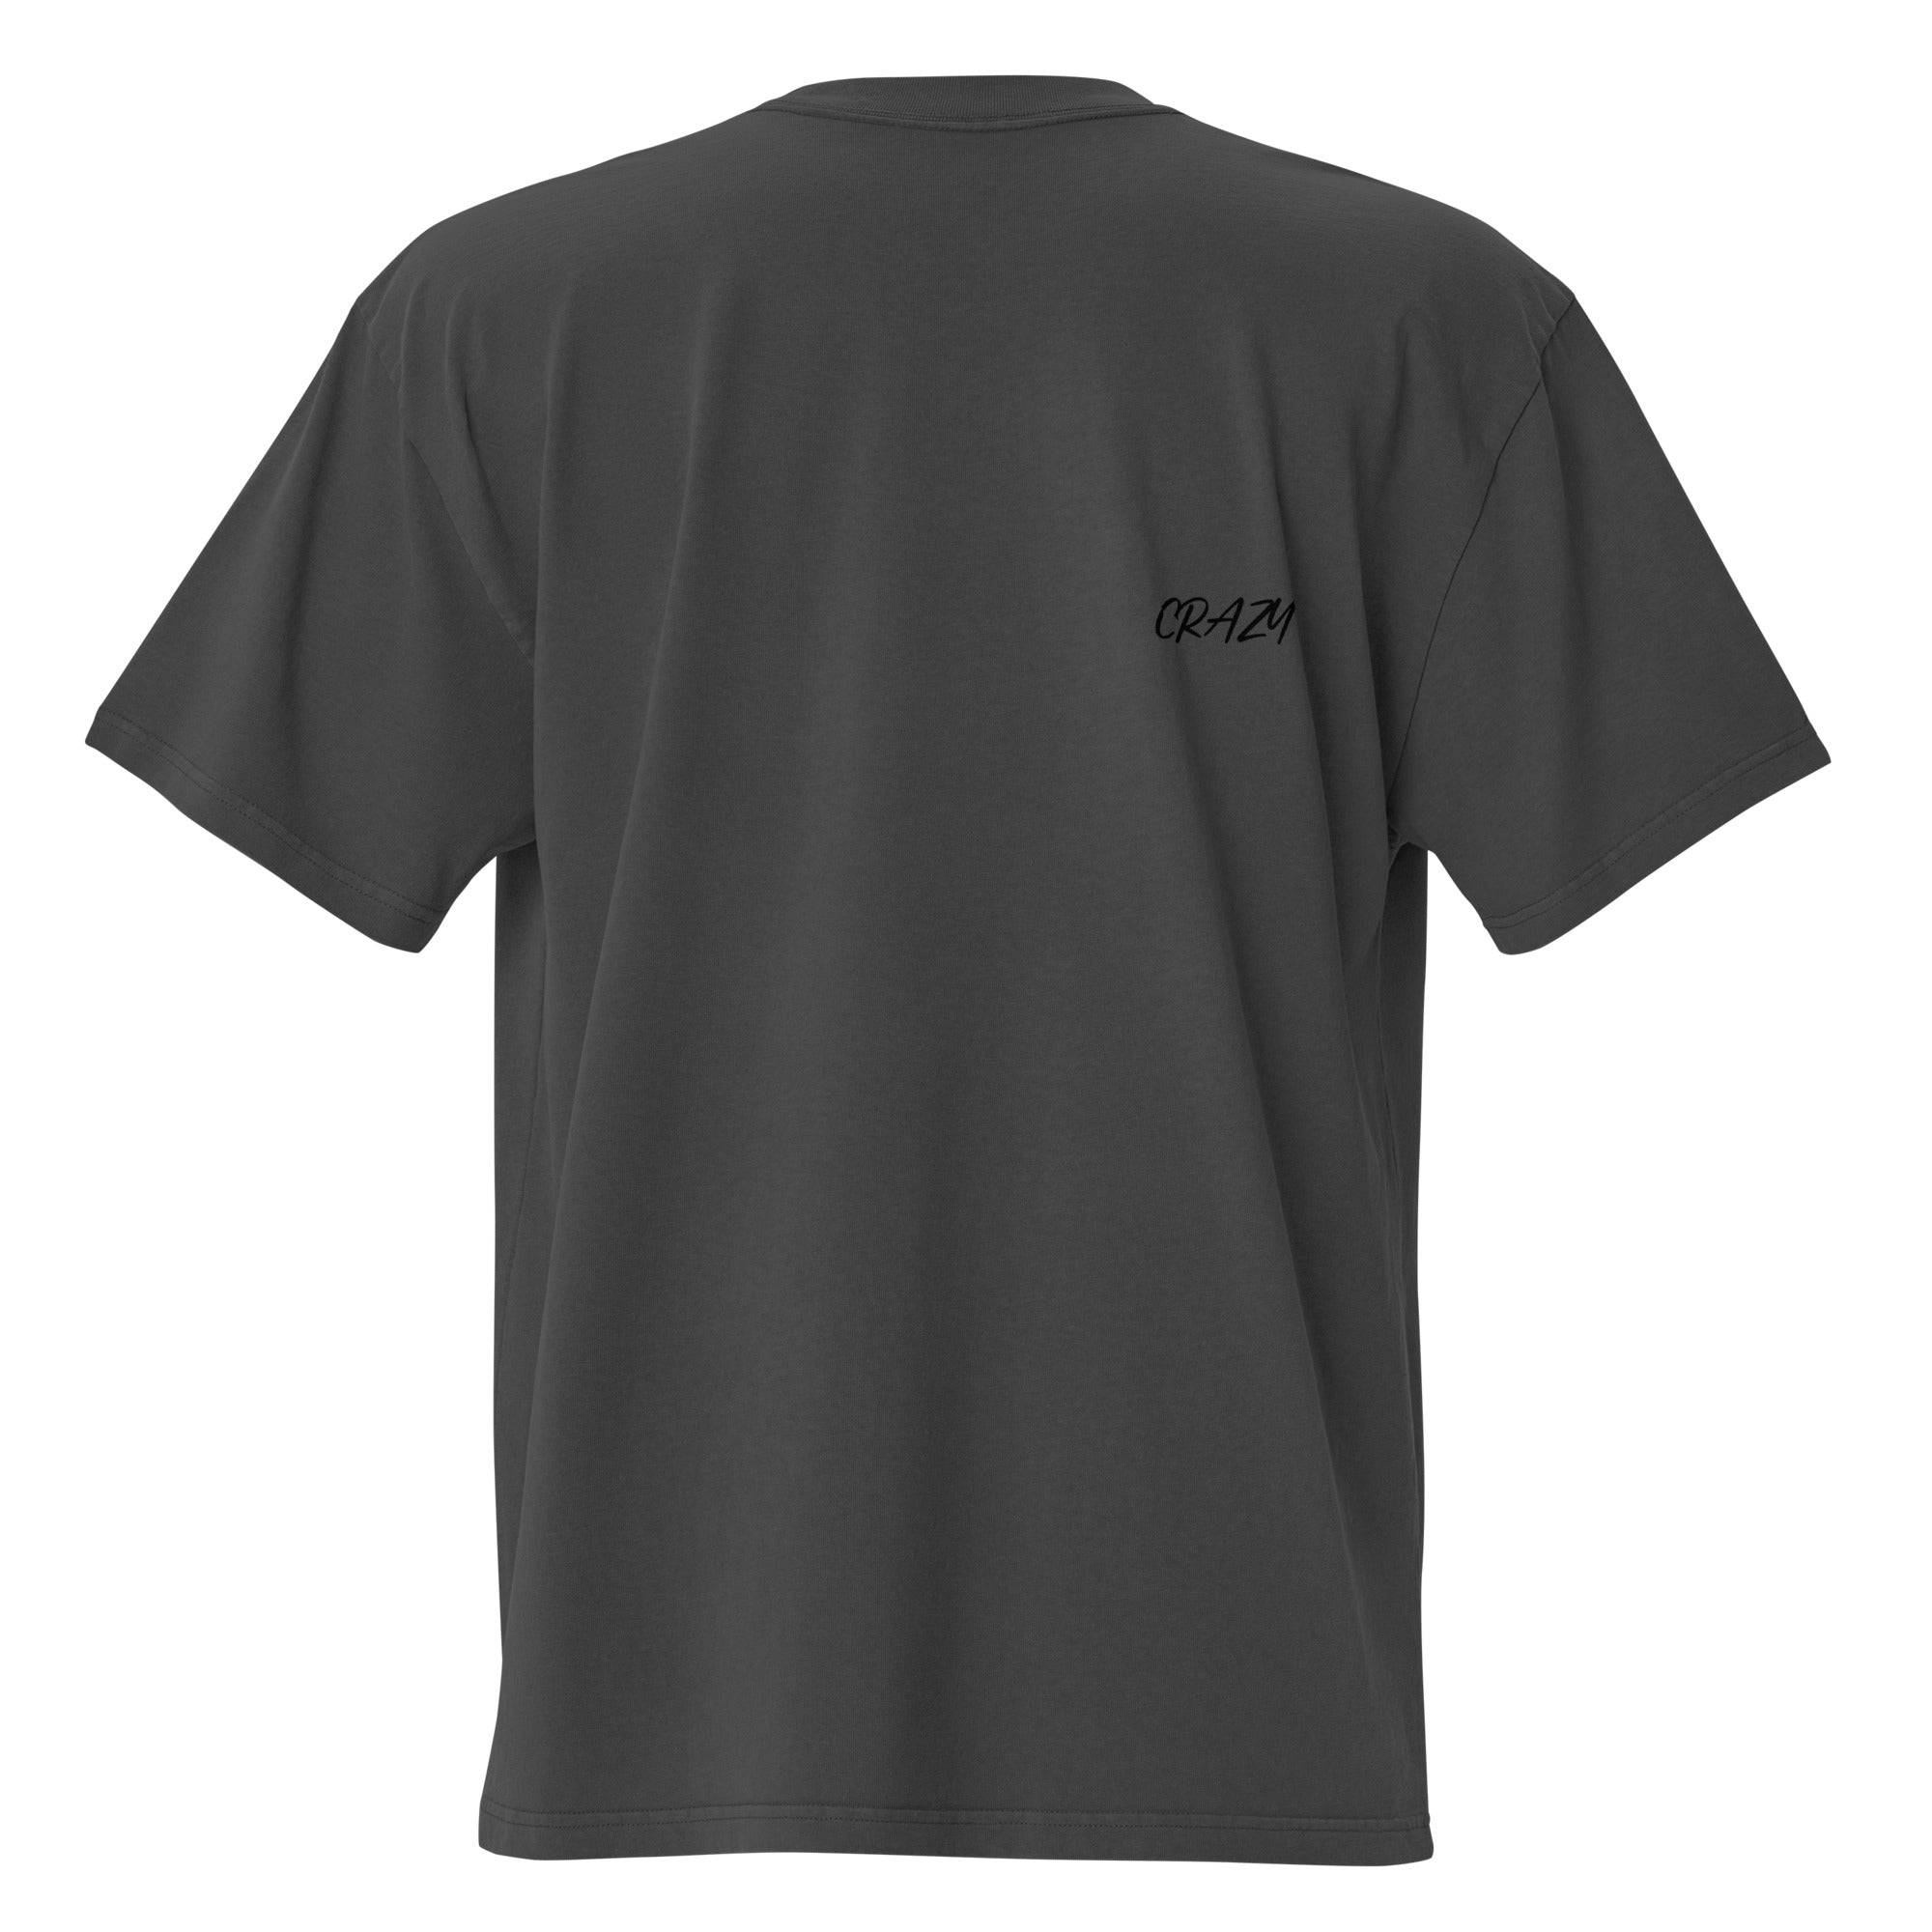 CSG oversized unisex vervaagd "SAY MY NAME" t-shirt